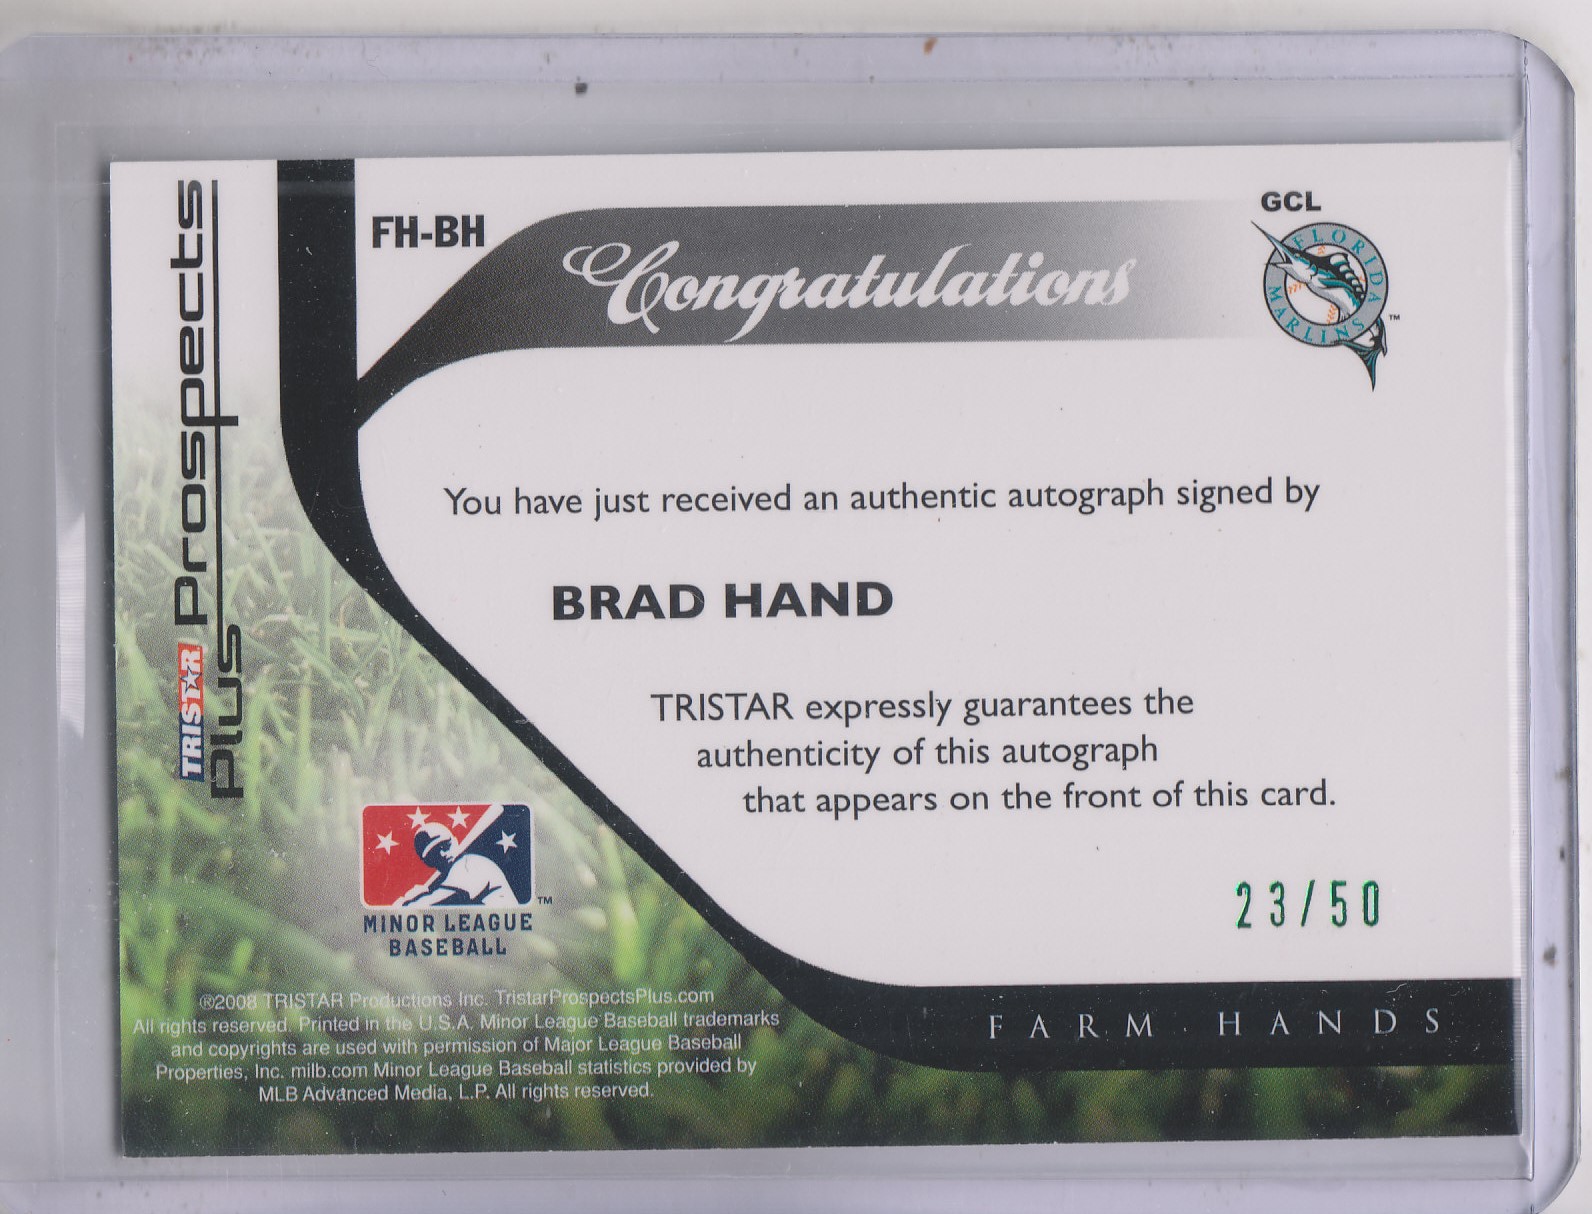 2008 TRISTAR Prospects Plus Farm Hands Autographs Green #FHBH Brad Hand back image